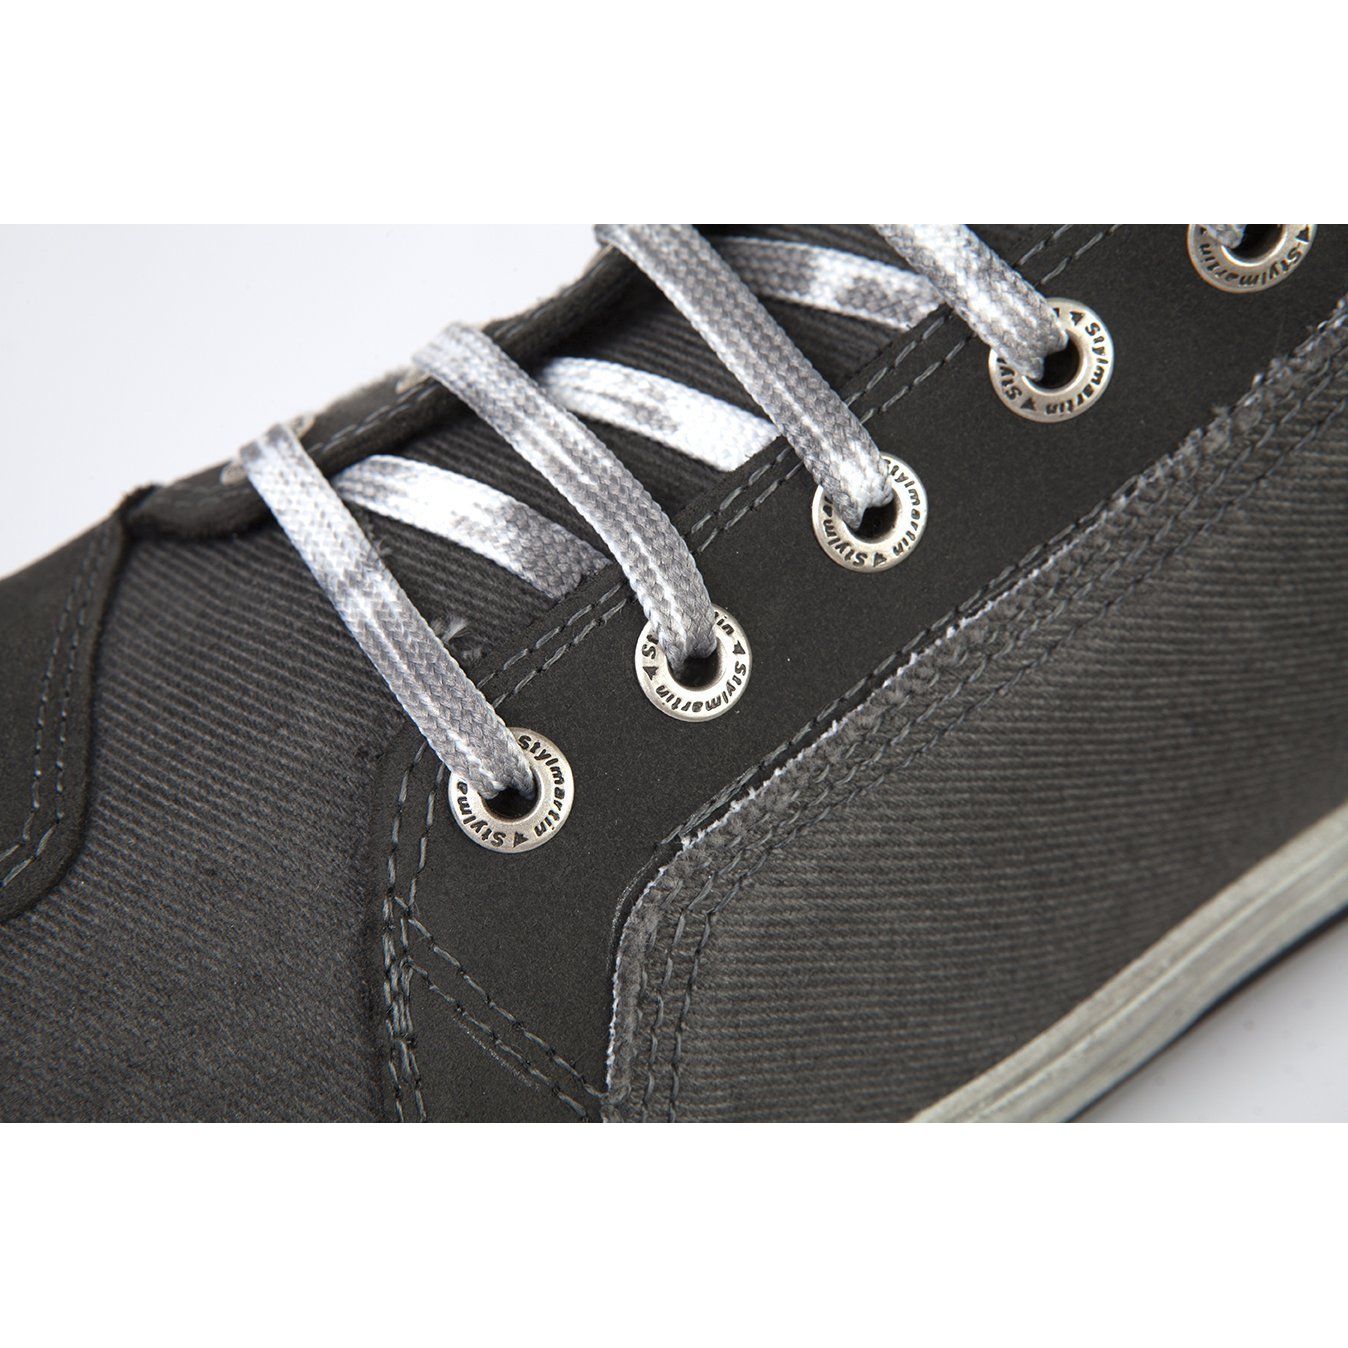 Stylmartin - Stylmartin Sunset Evo Sneaker in Grey - Boots - Salt Flats Clothing